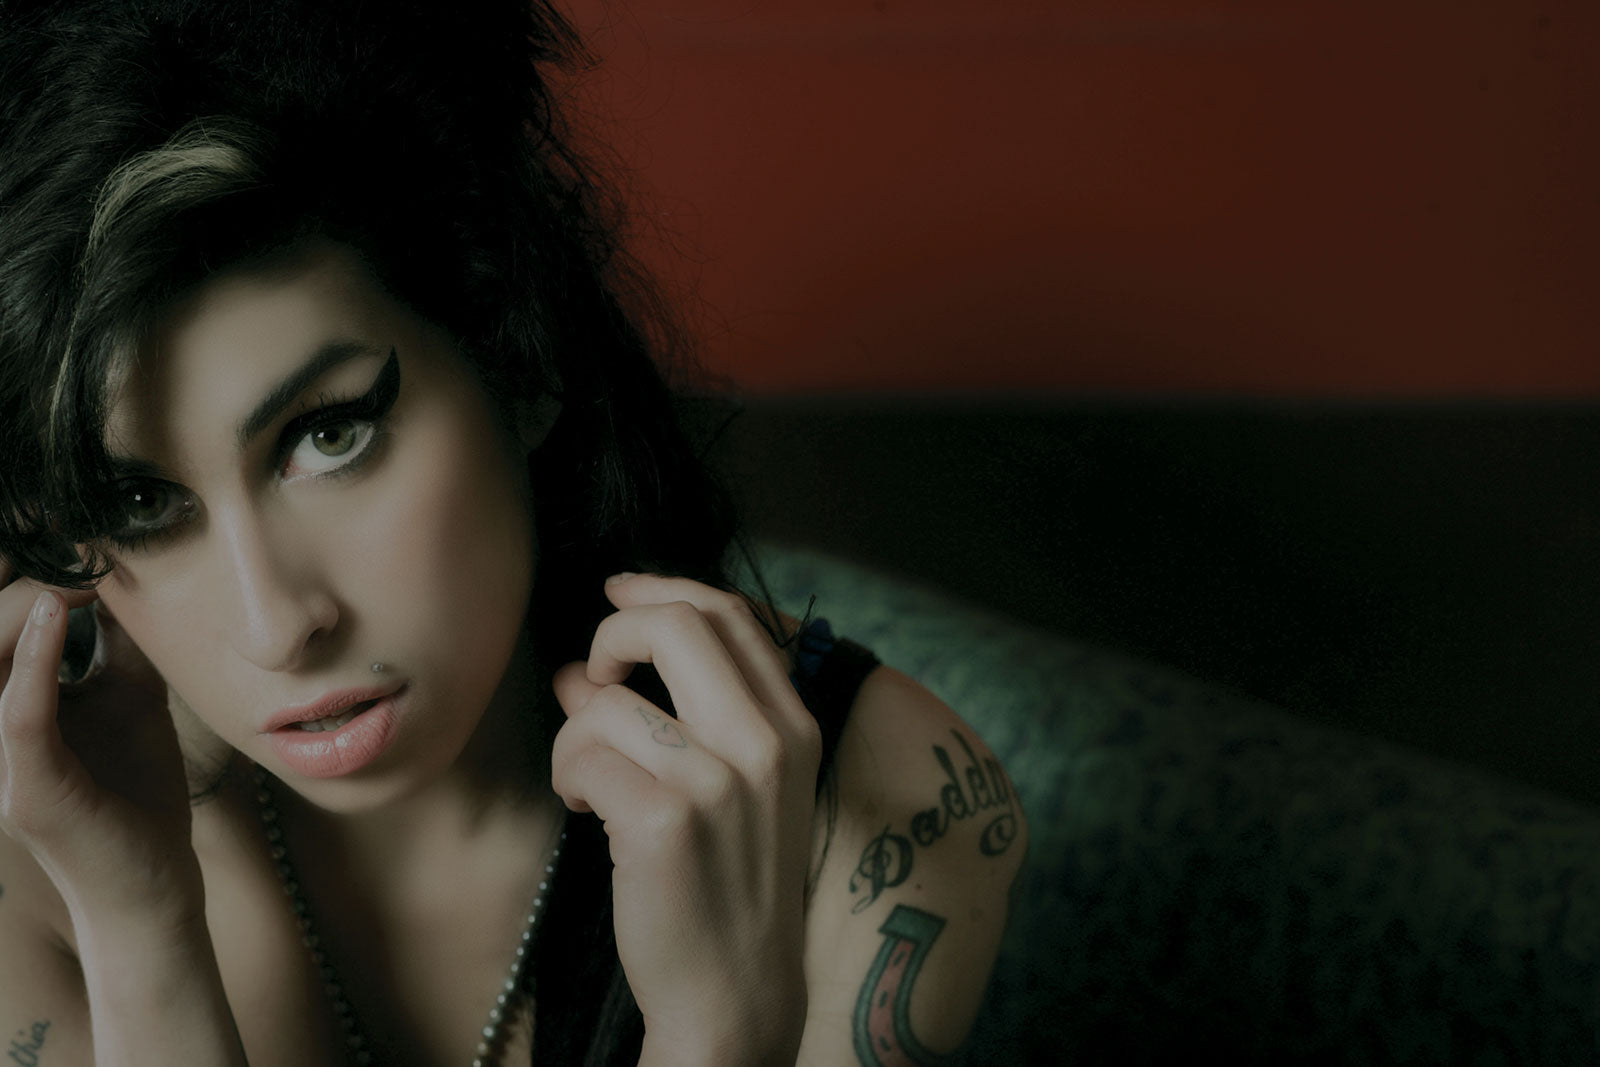 📀 Amy Winehouse - Back To Black ▪️ $26.000 ▪️ 1 Disco